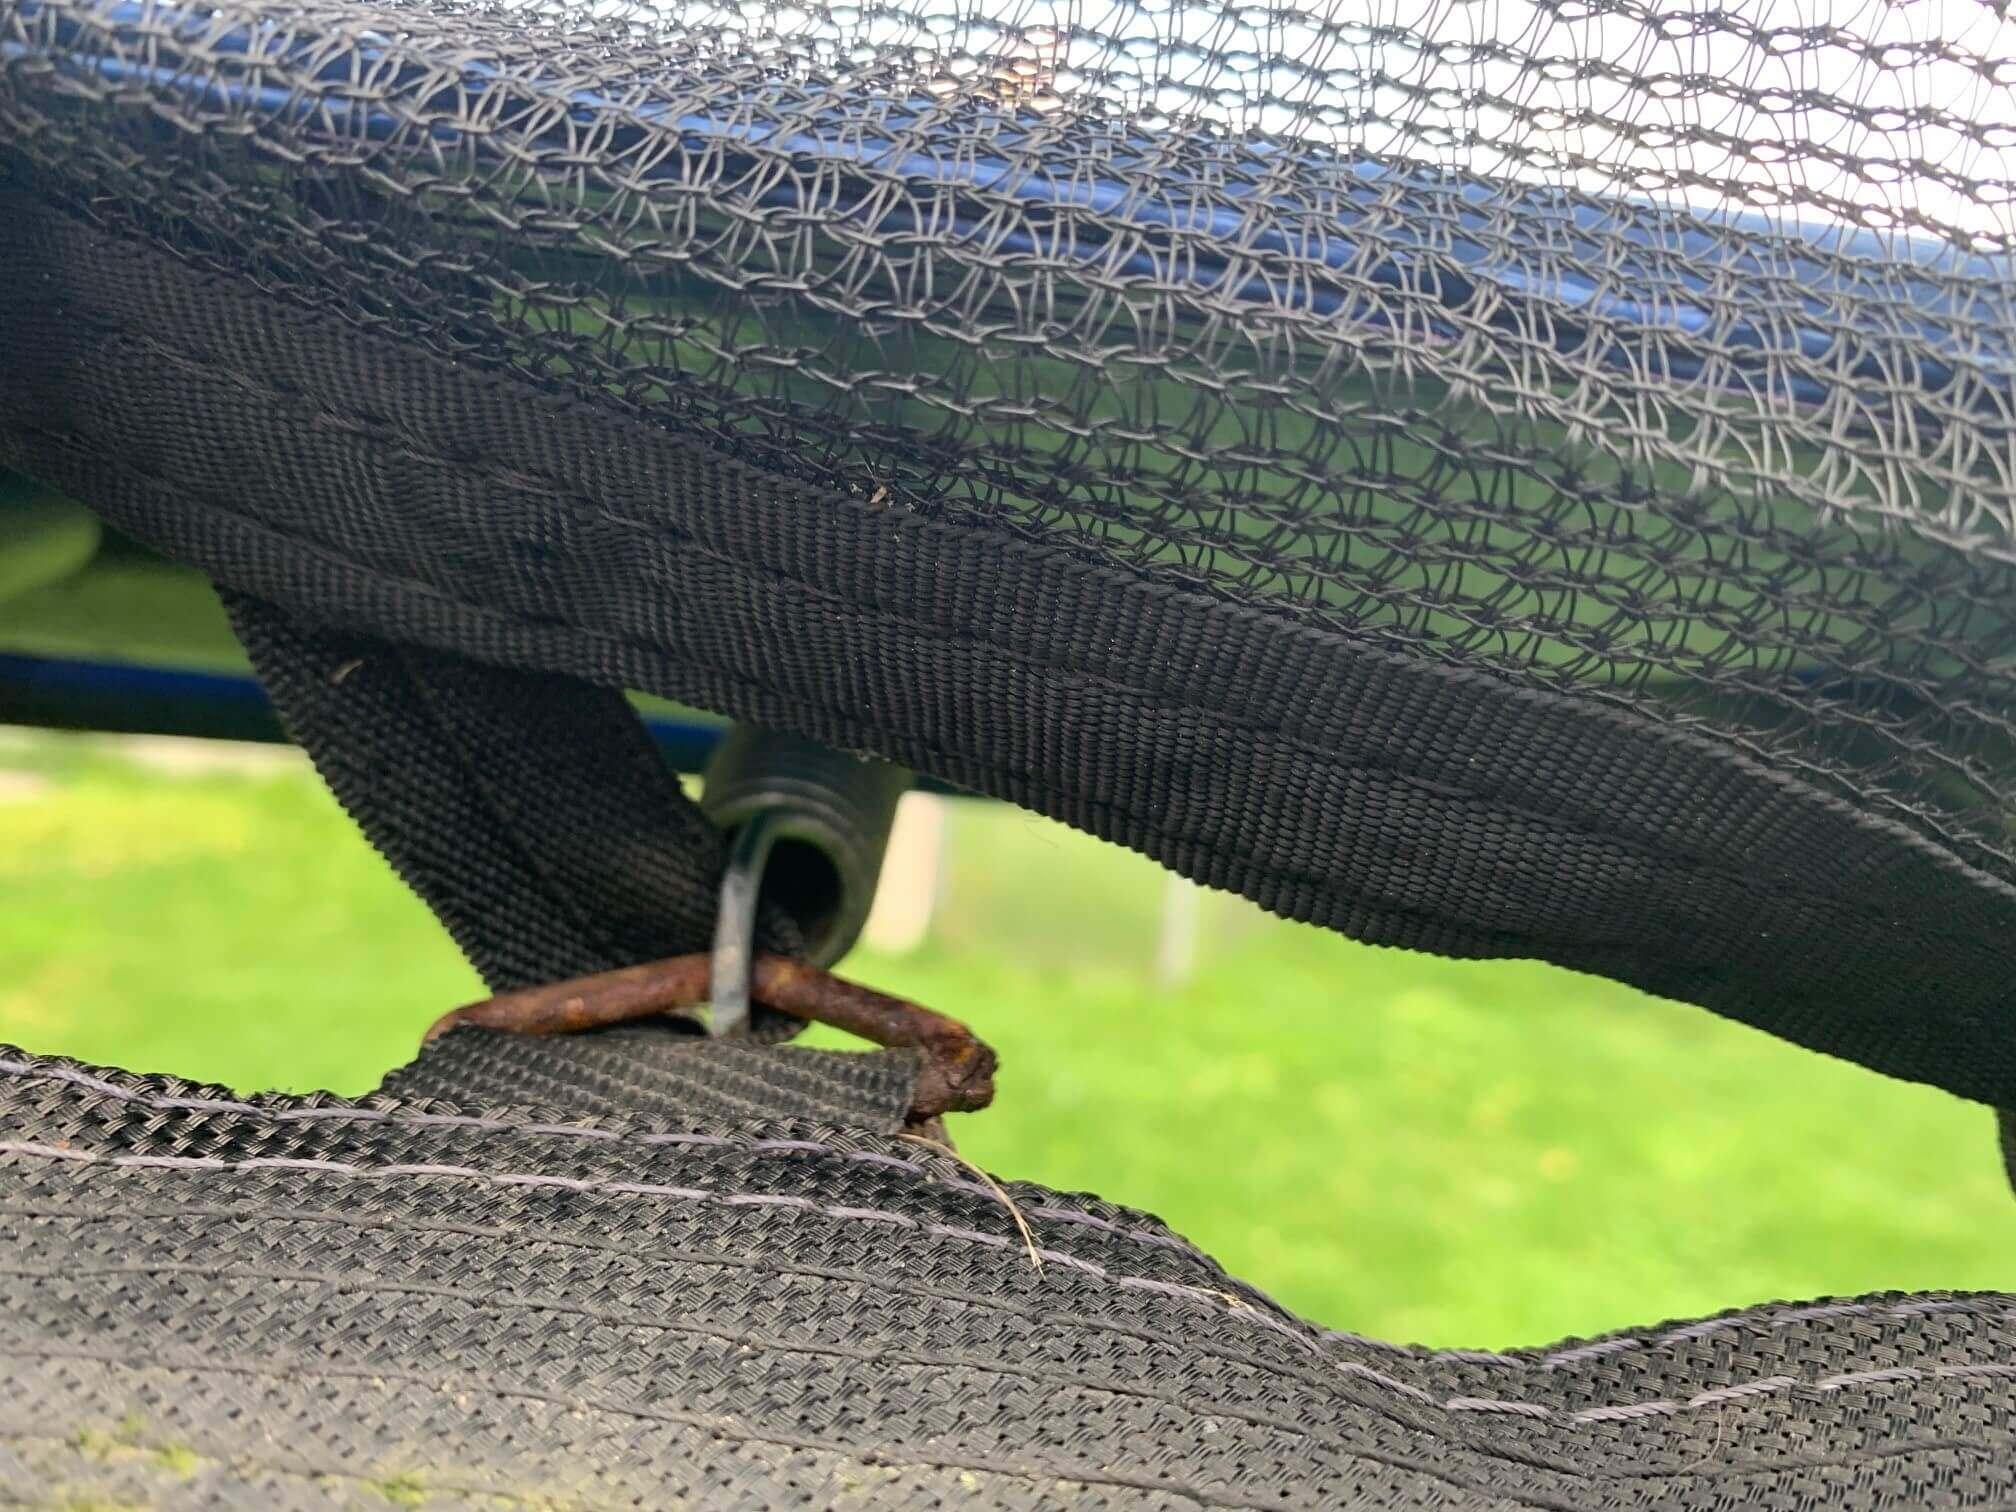 Exposed springs on spring-based trampoline